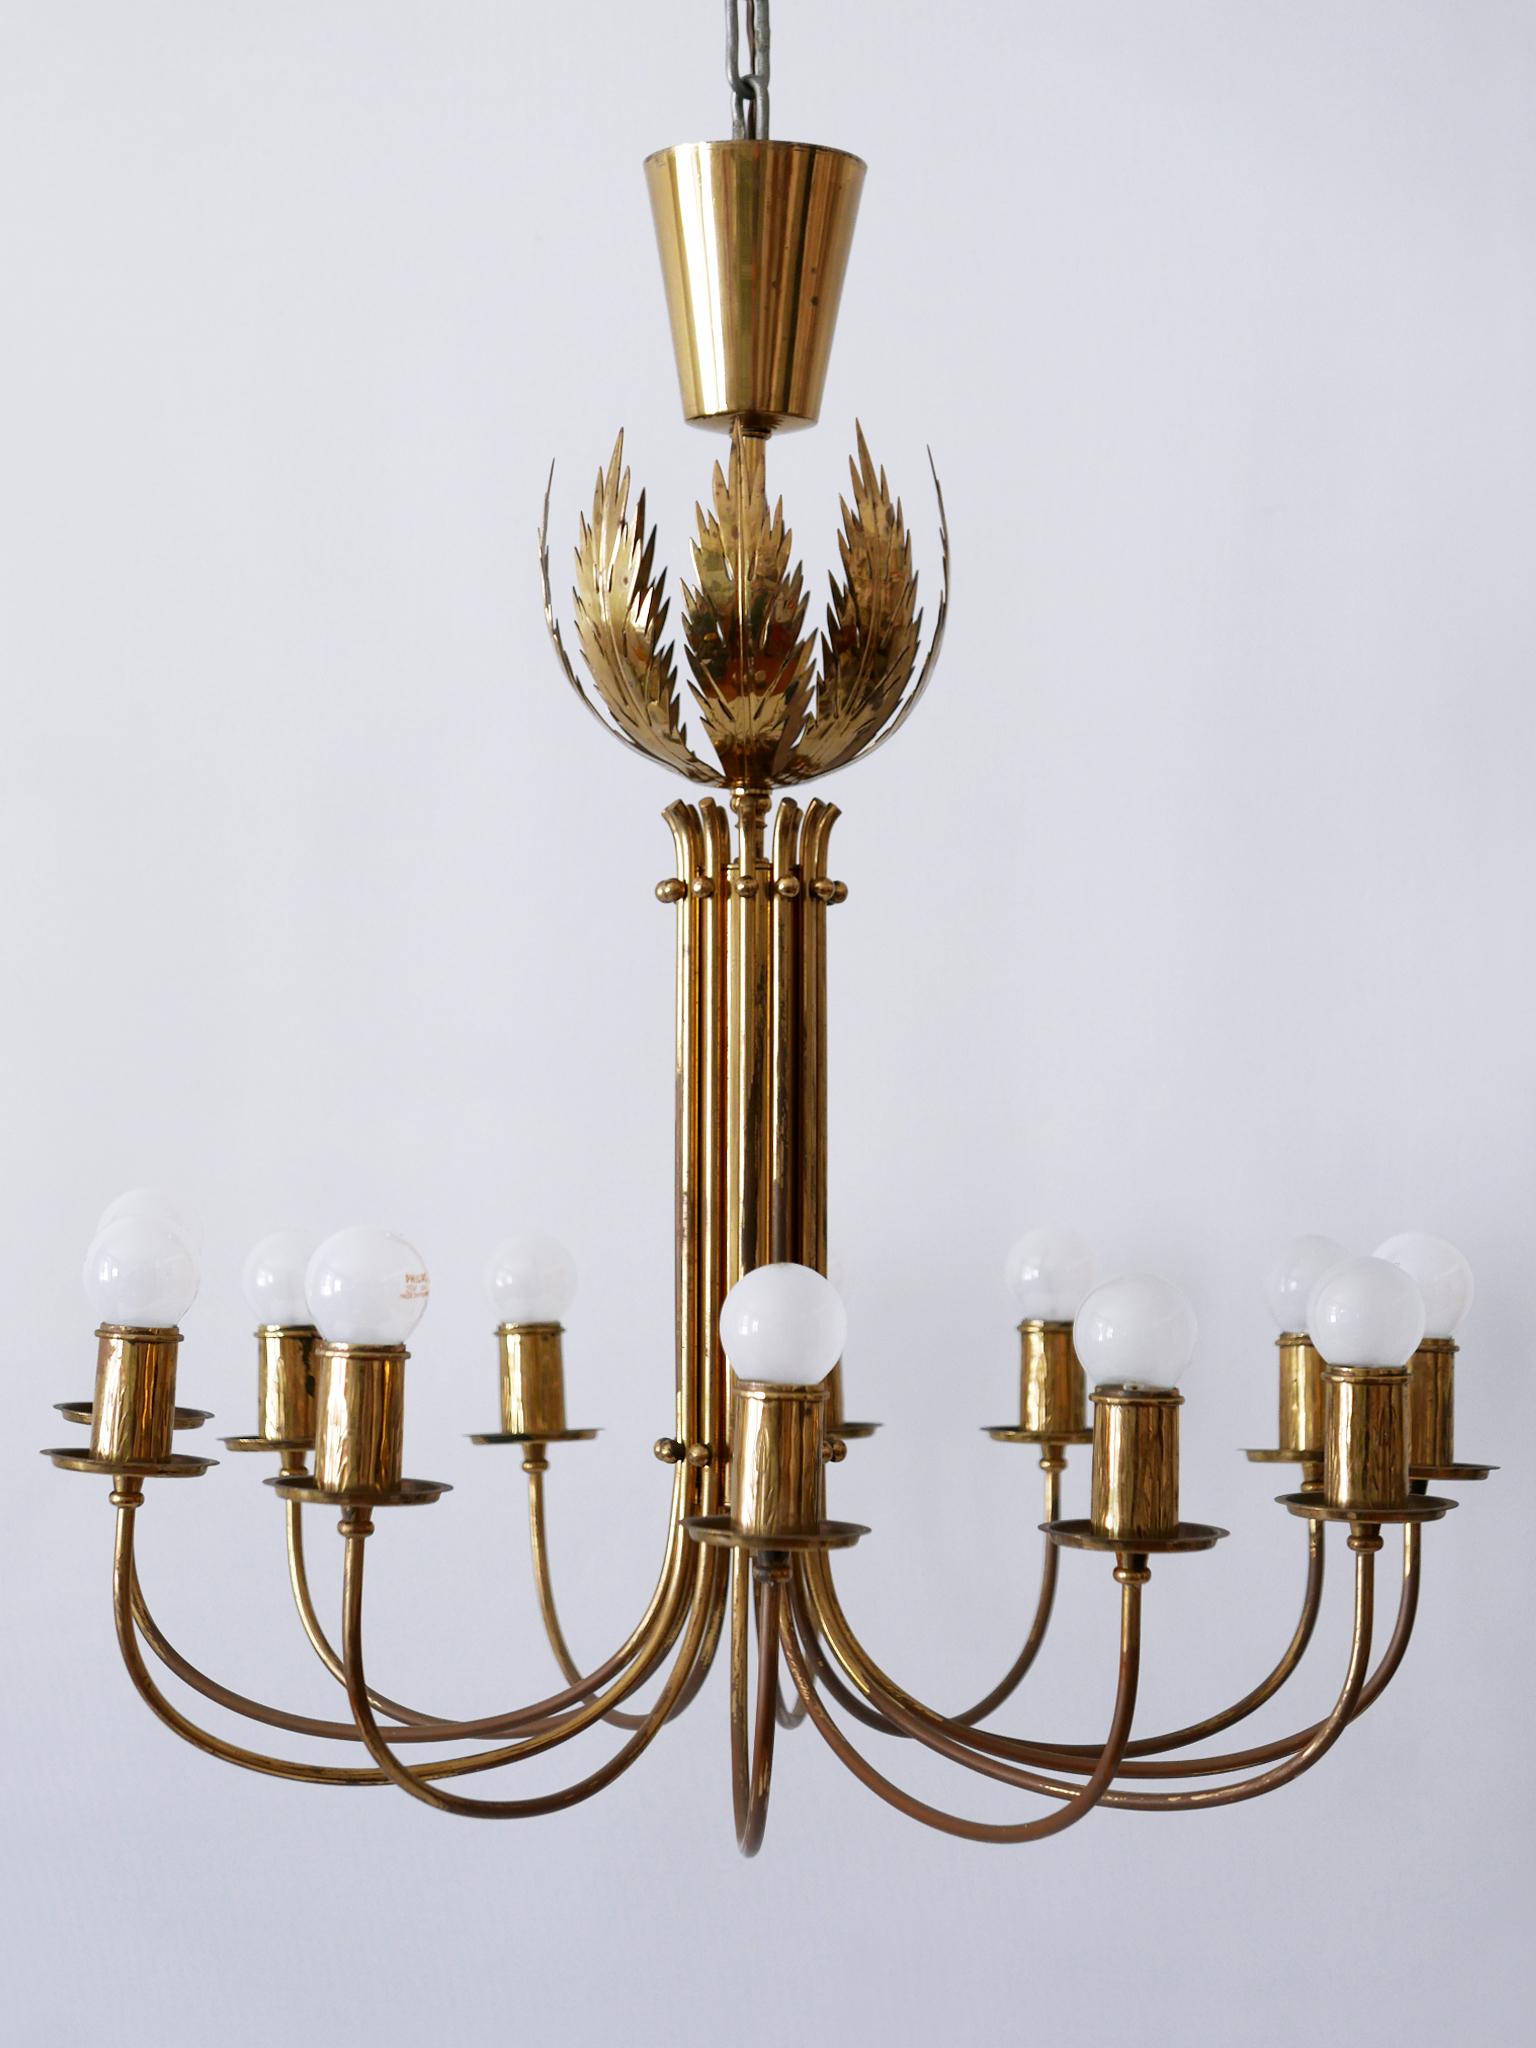 Rare 12-Armed Brass Chandeliers or Pendant Lamps by Vereinigte Werkstätten 1950s For Sale 9